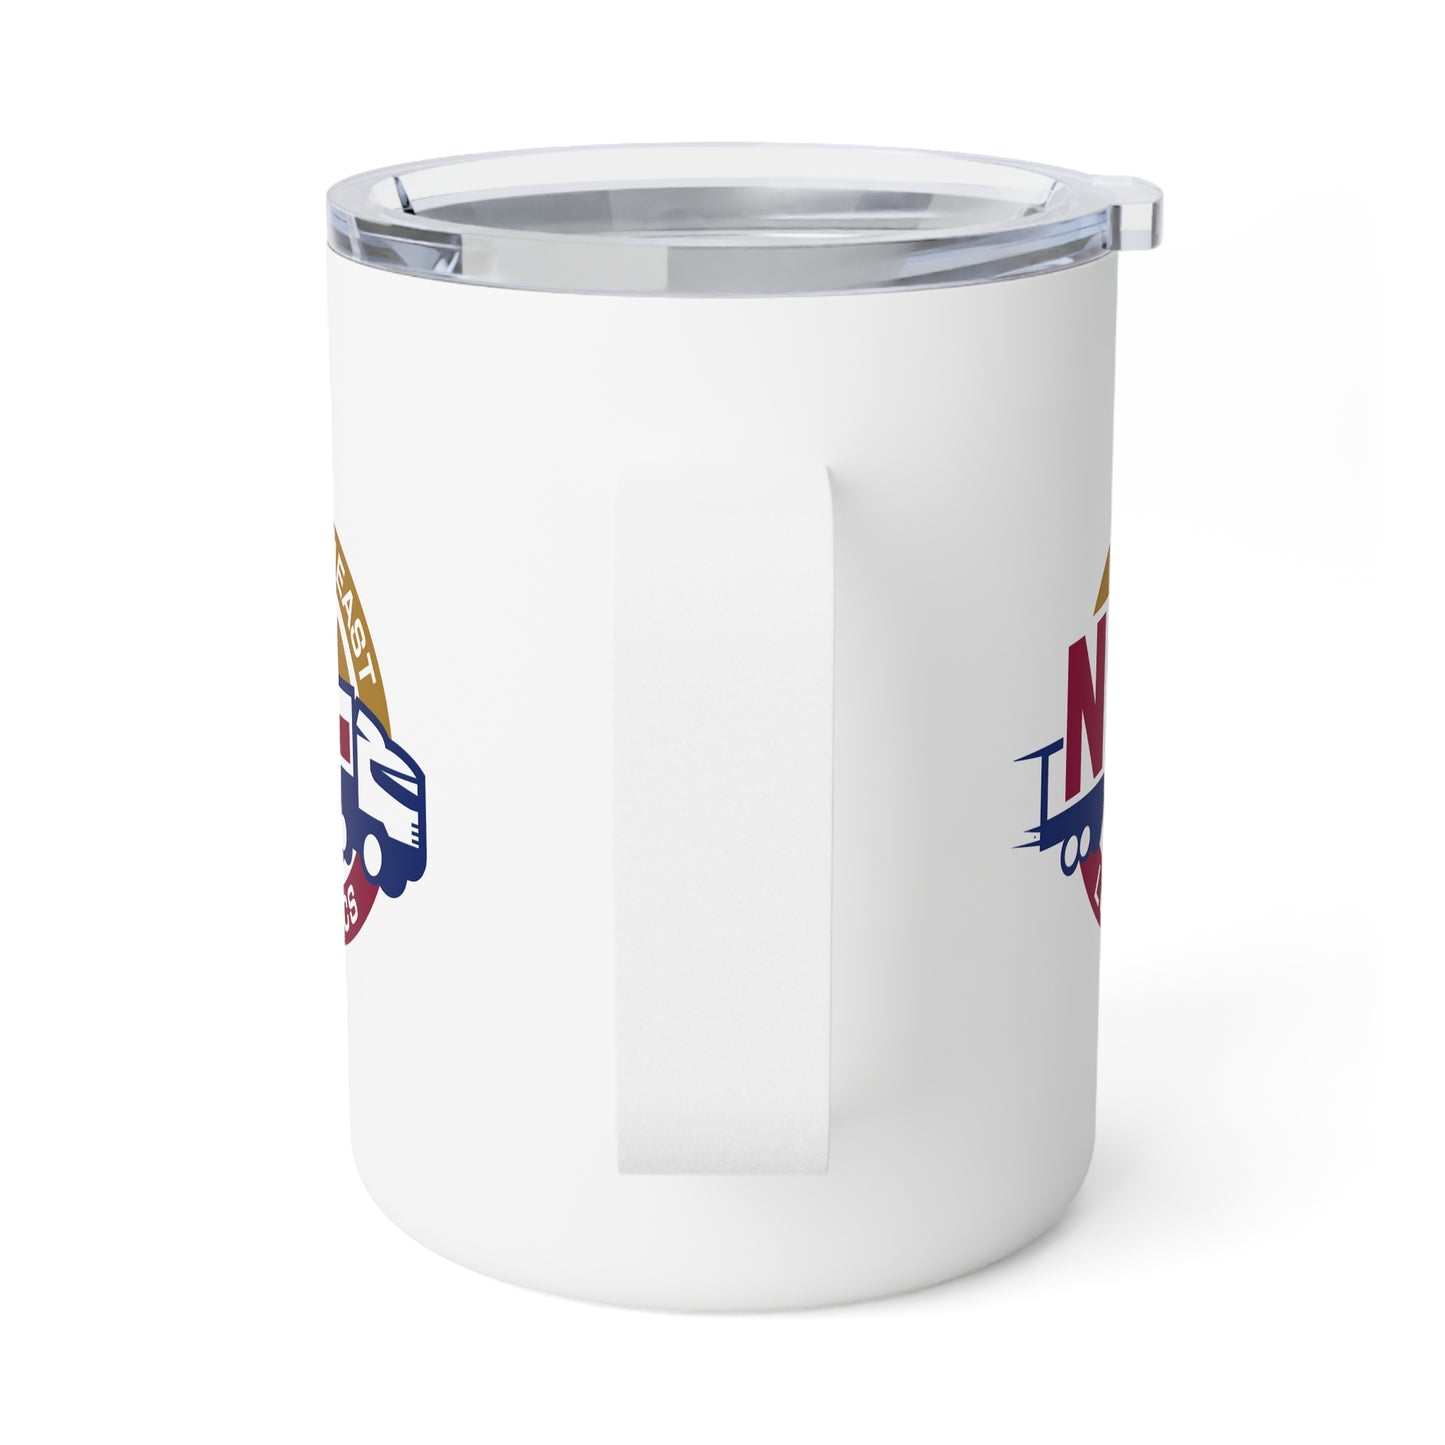 Insulated Coffee Mug, 10oz - NEL